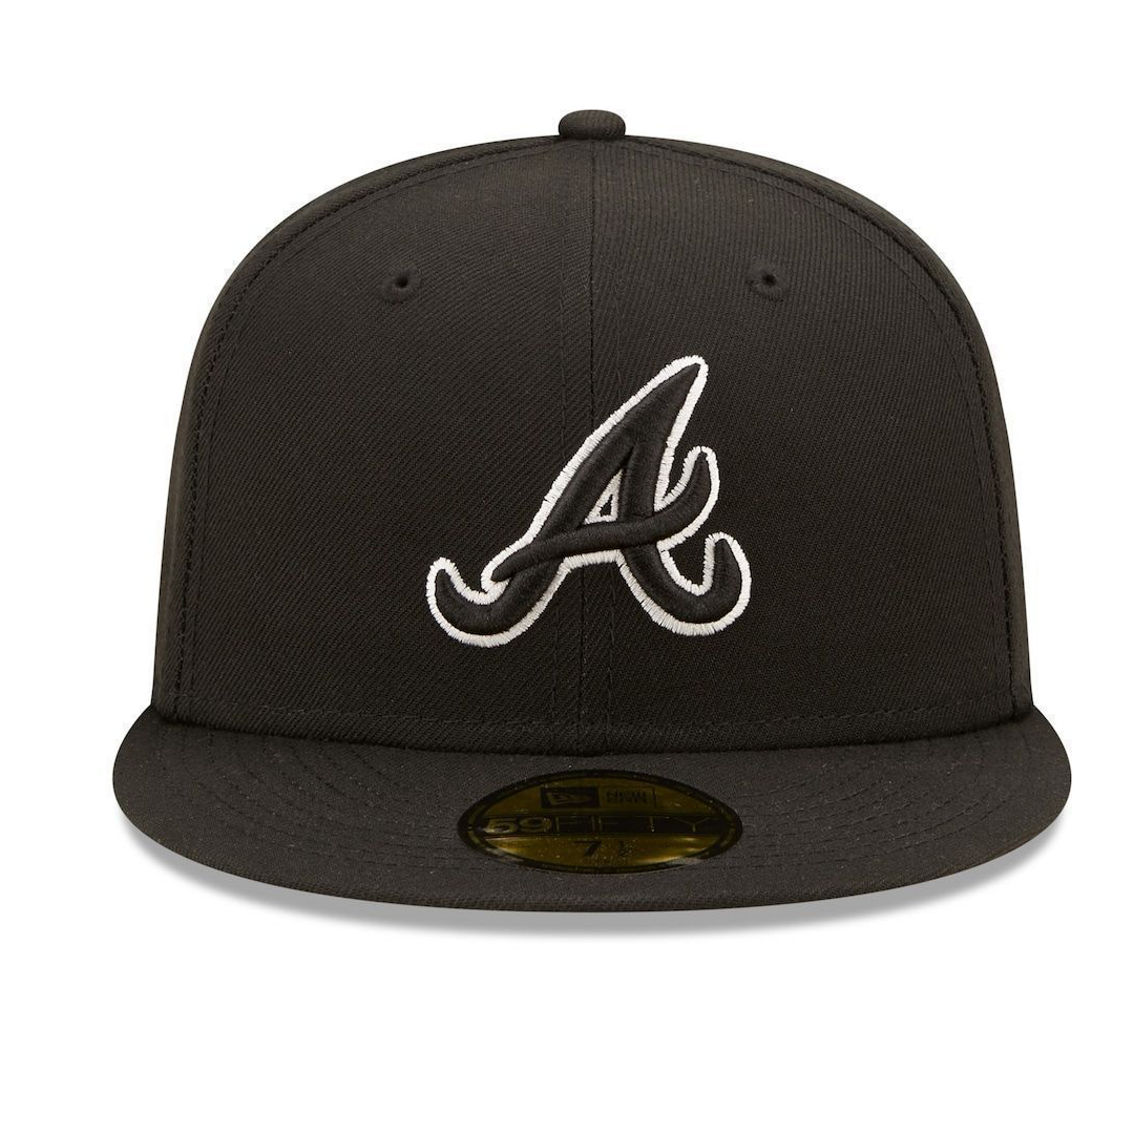 New Era Men's Atlanta Braves Black on Black Dub 59FIFTY Fitted Hat - Image 3 of 4